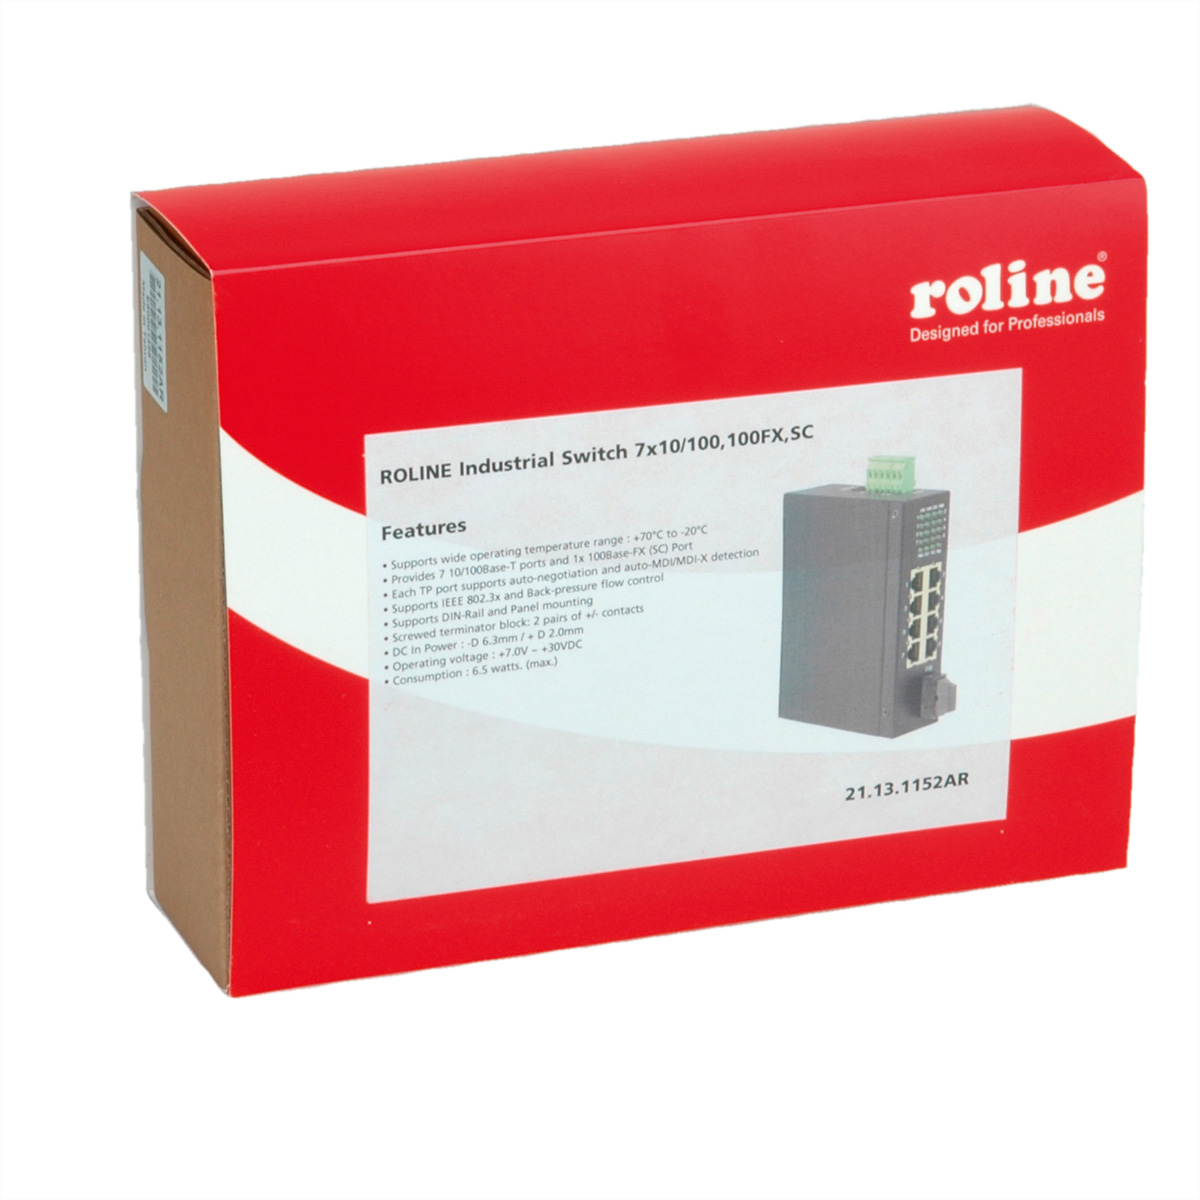 ROLINE 21131152 Industrie Switch